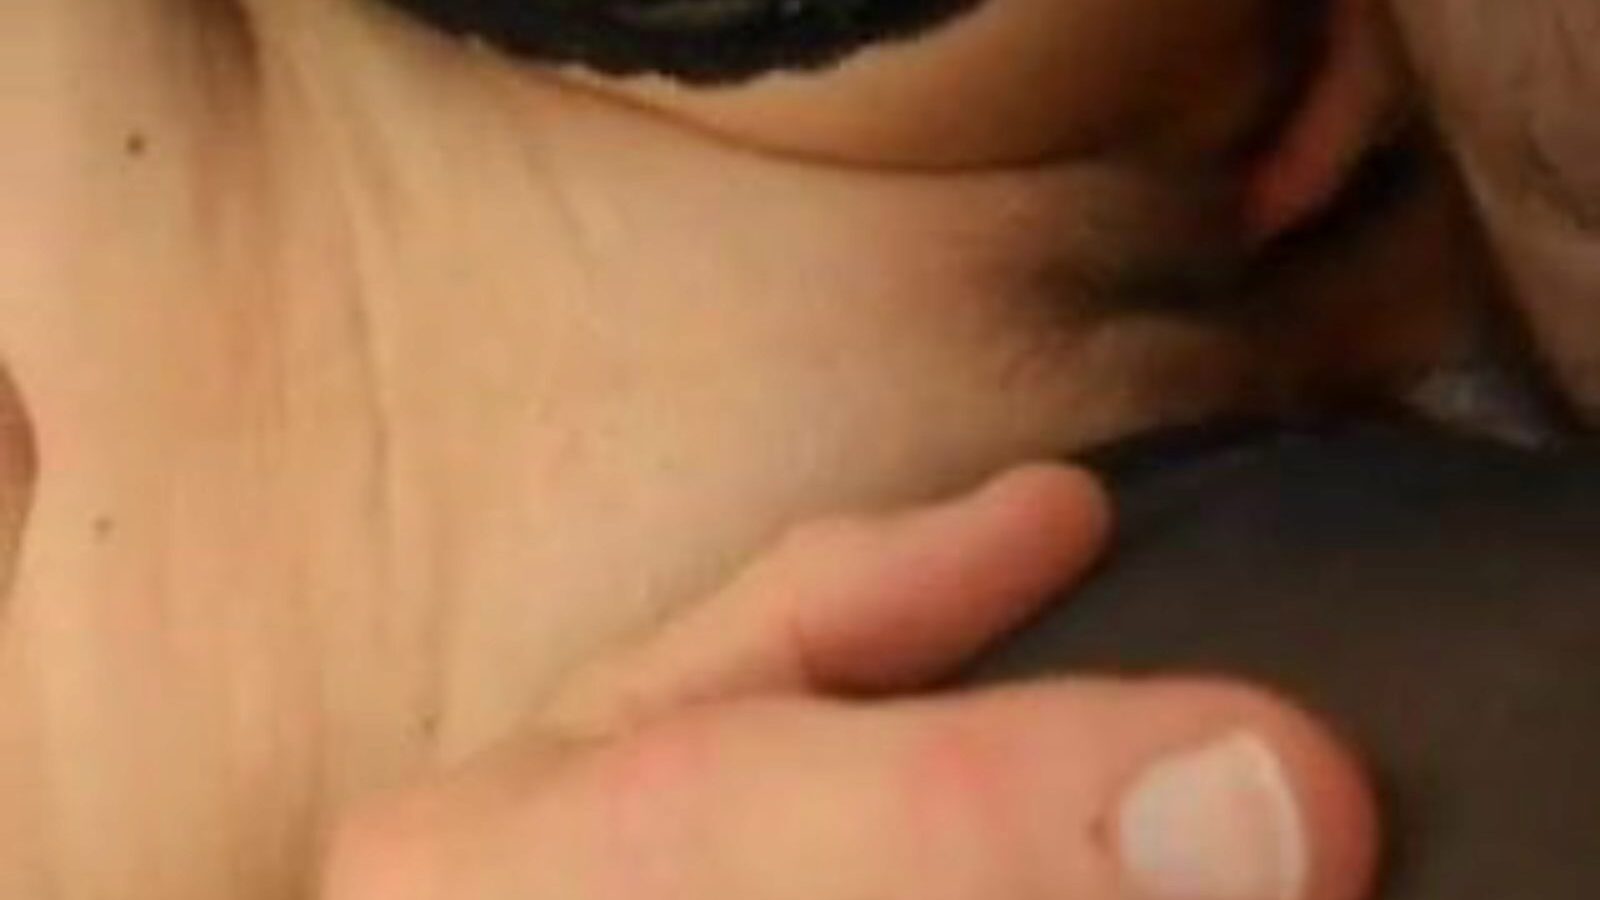 cum on pussylips: new on netflix porn video bb - xhamster شاهد cum on pussylips tube hump clip مجانًا على xhamster ، مع السرب الأكثر جاذبية من الجديد على netflix انتشر العضو التناسلي النسوي وأظهر مشاهد الفيديو الإباحية